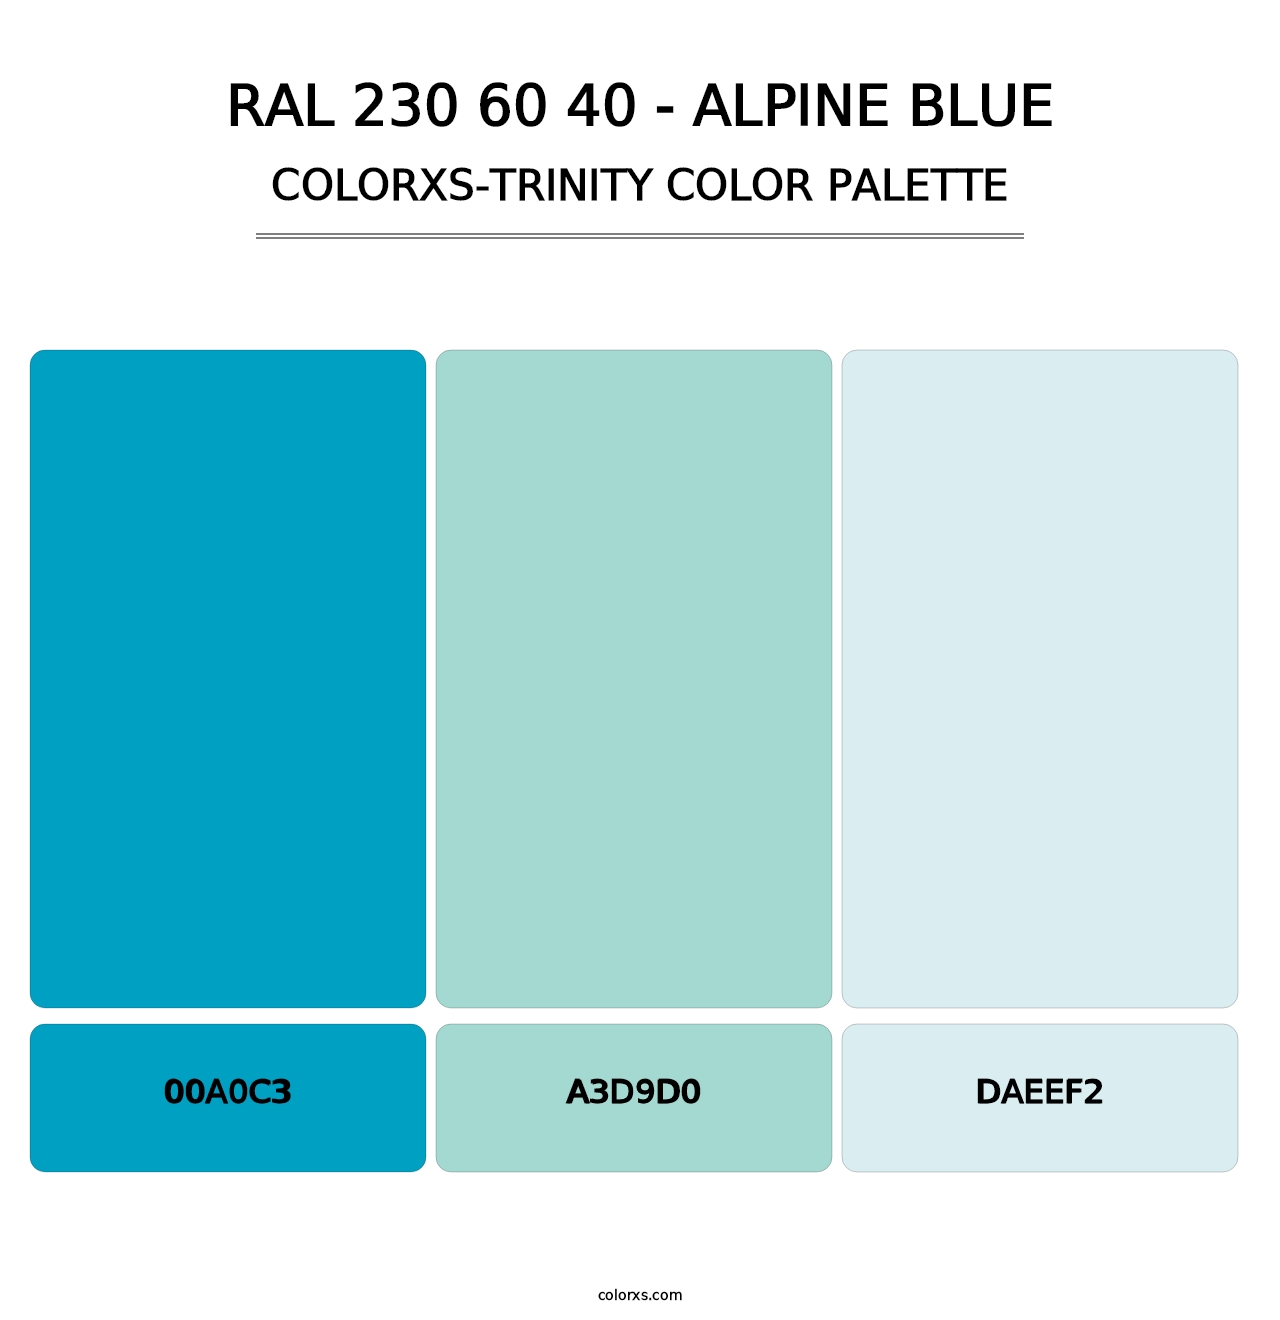 RAL 230 60 40 - Alpine Blue - Colorxs Trinity Palette